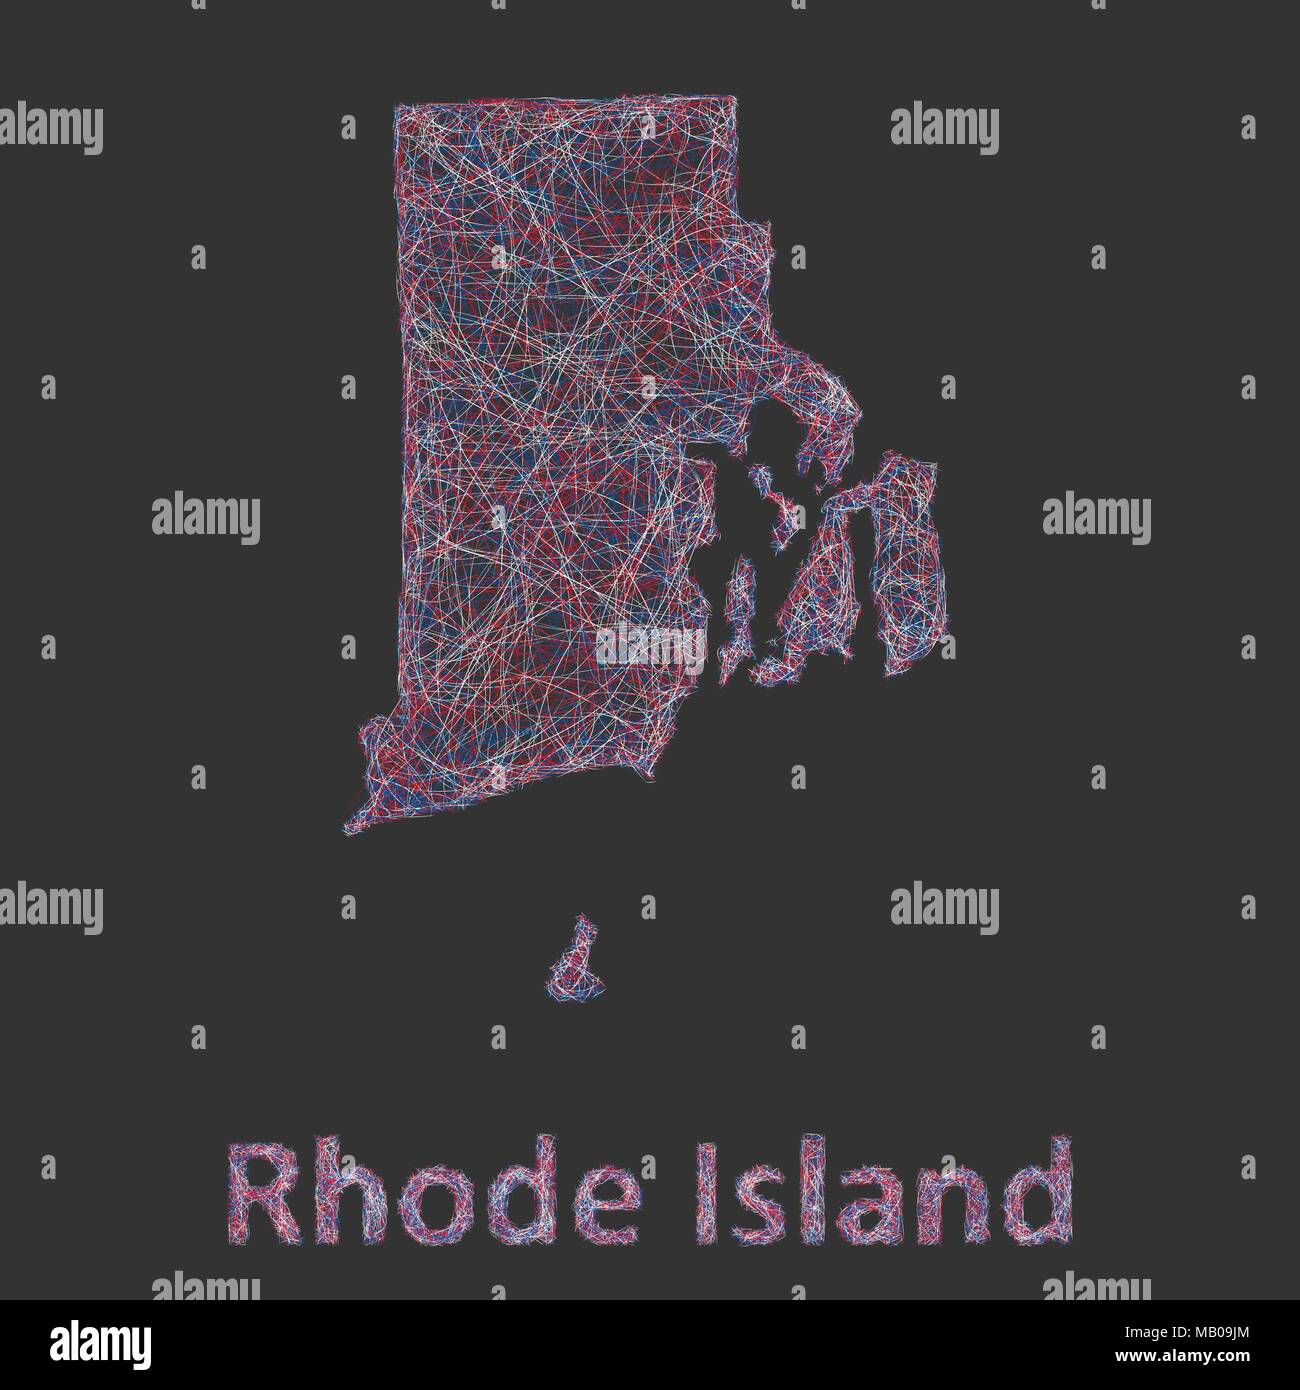 Rhode Island line art map Stock Vector